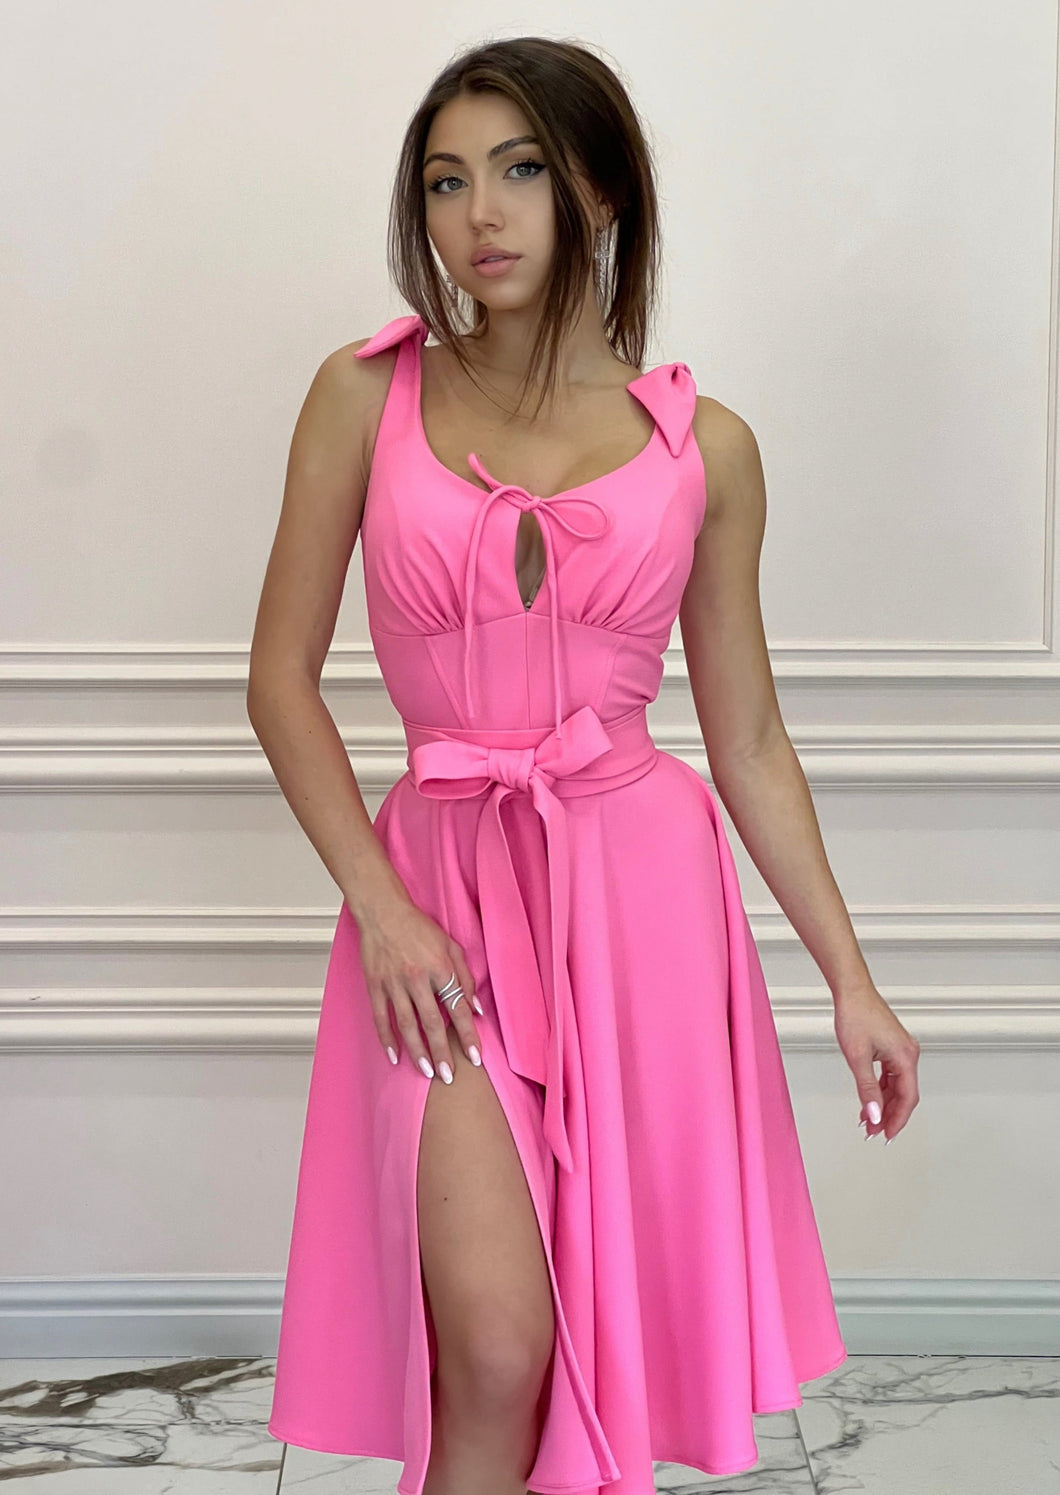 POSITANO Hot Pink dress